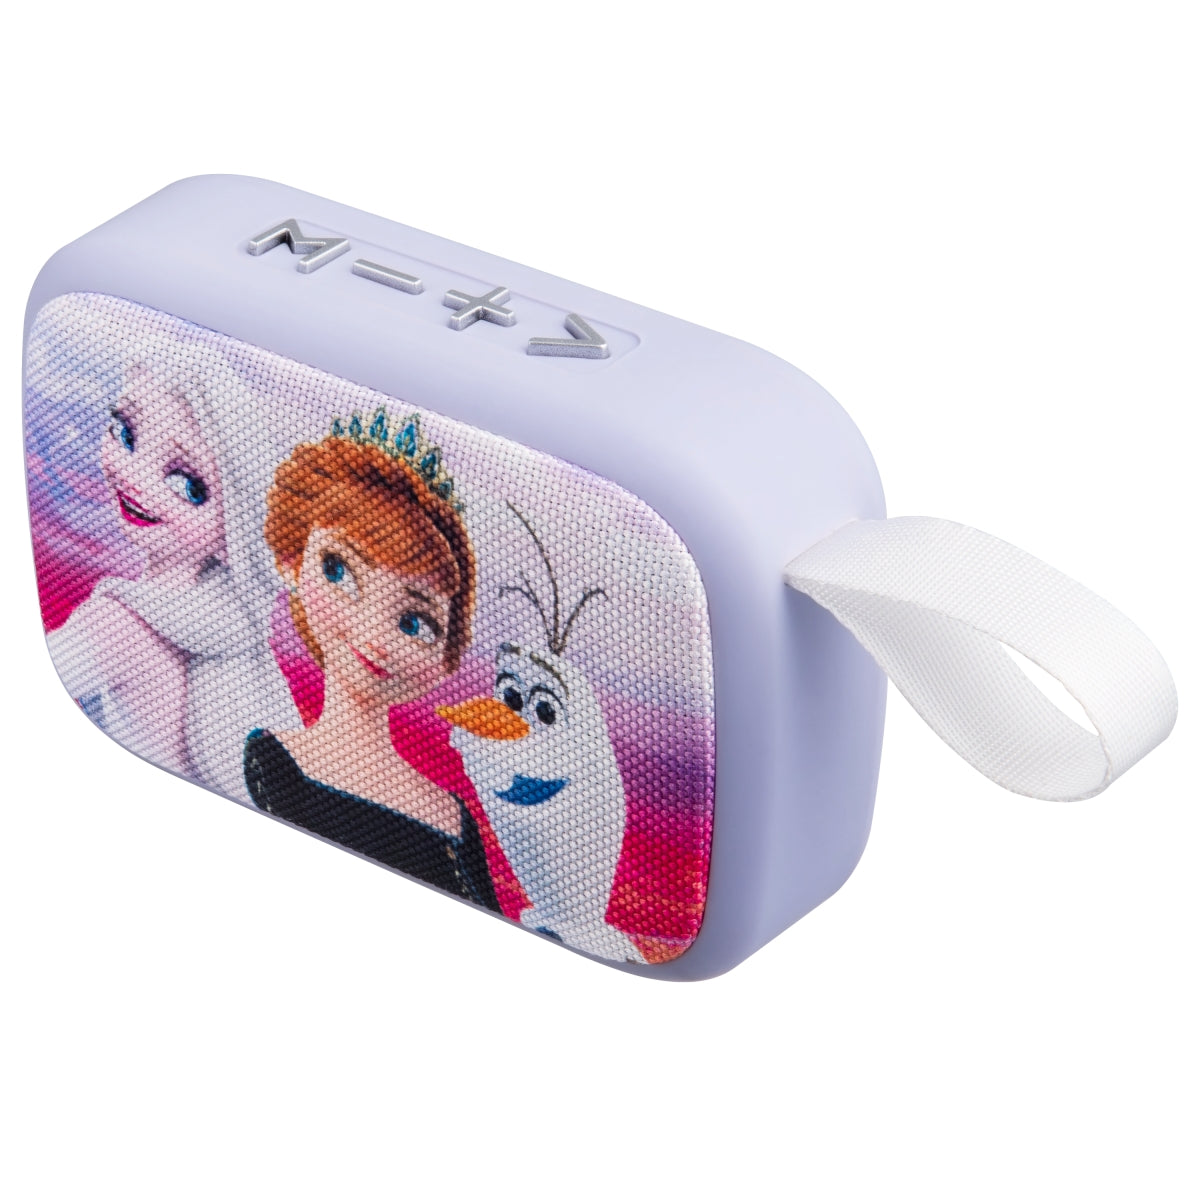 Disney Bluetooth Speaker - Frozen